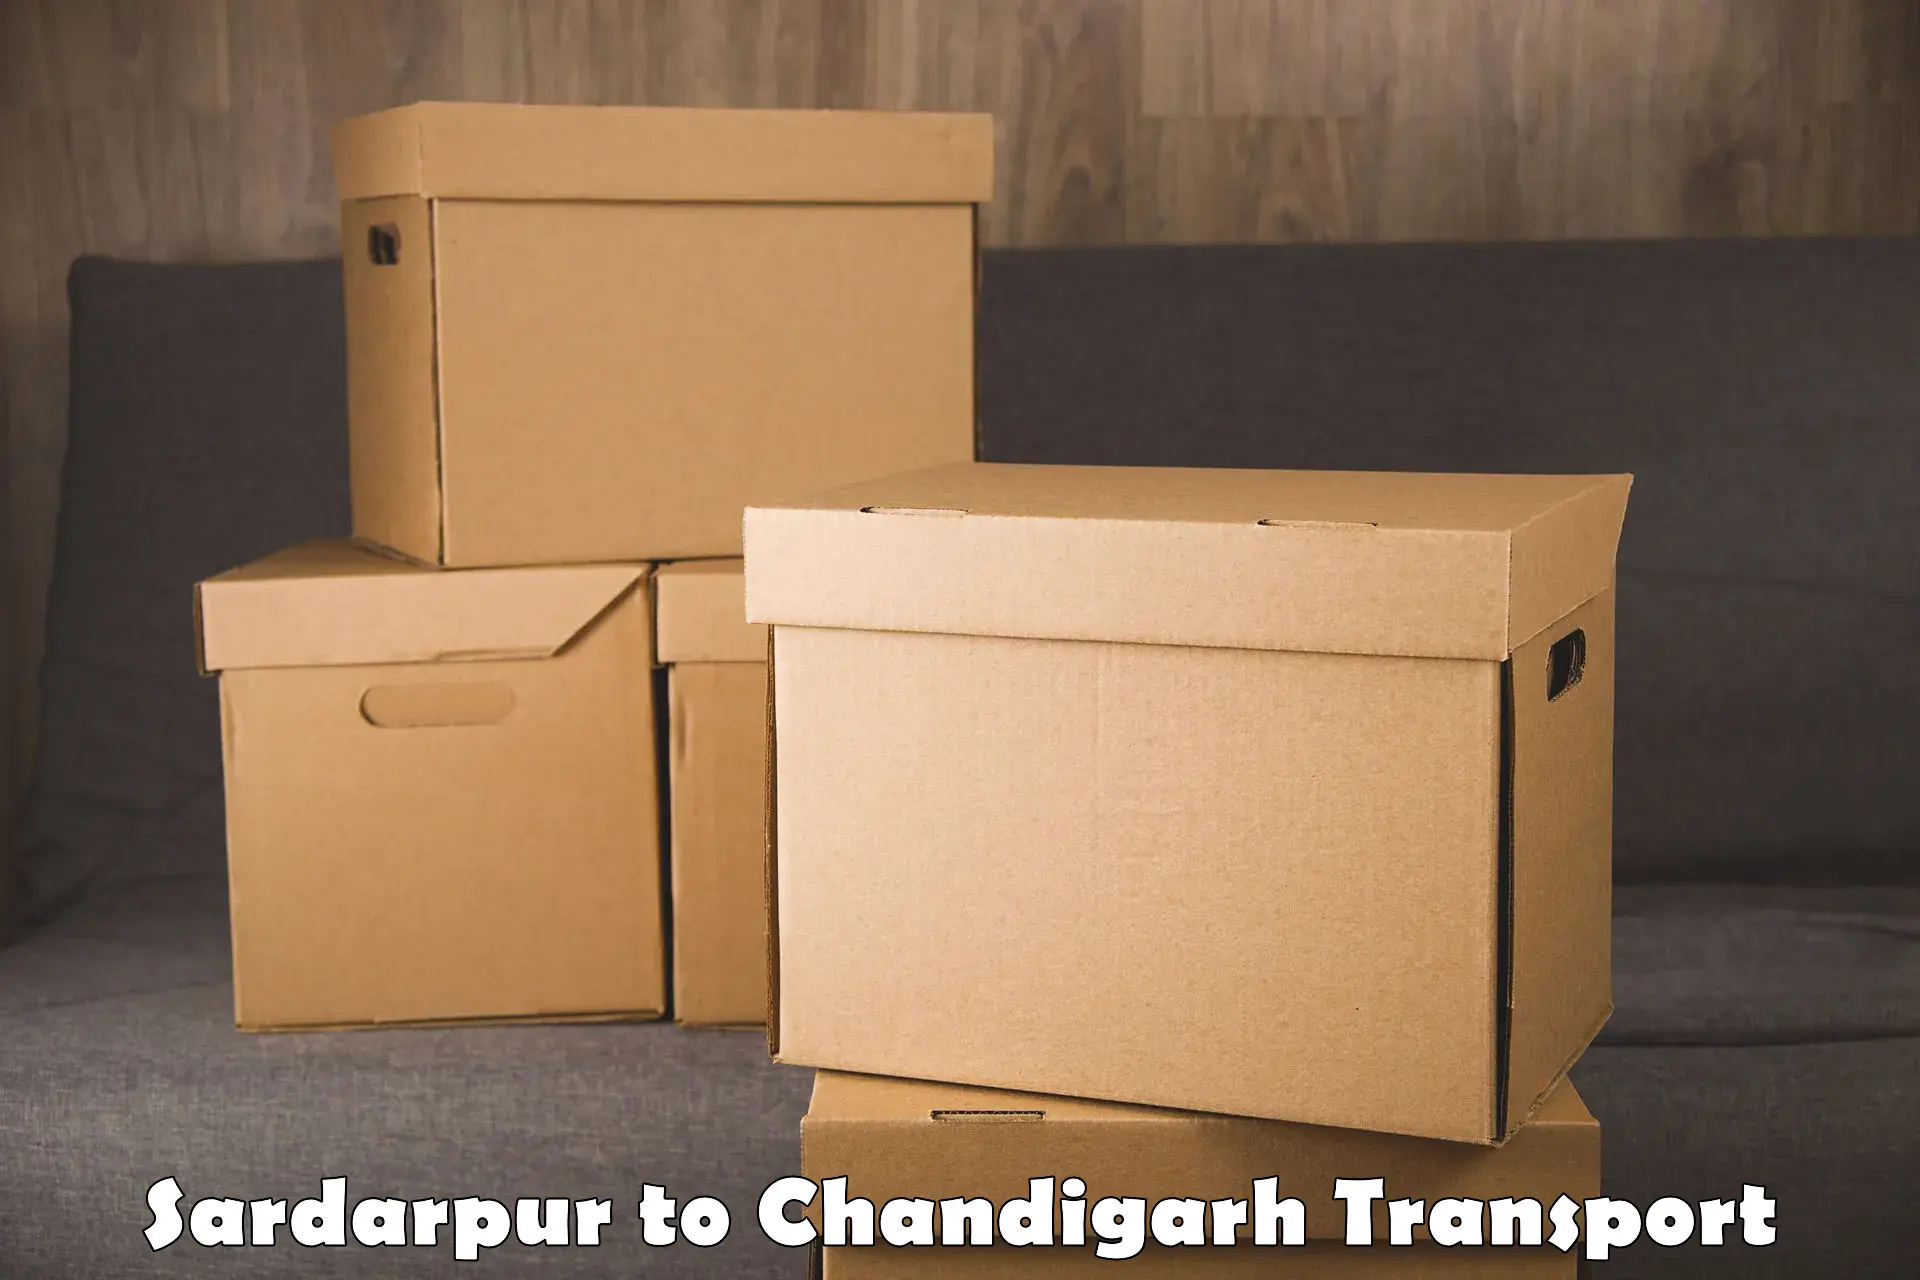 Commercial transport service Sardarpur to Chandigarh